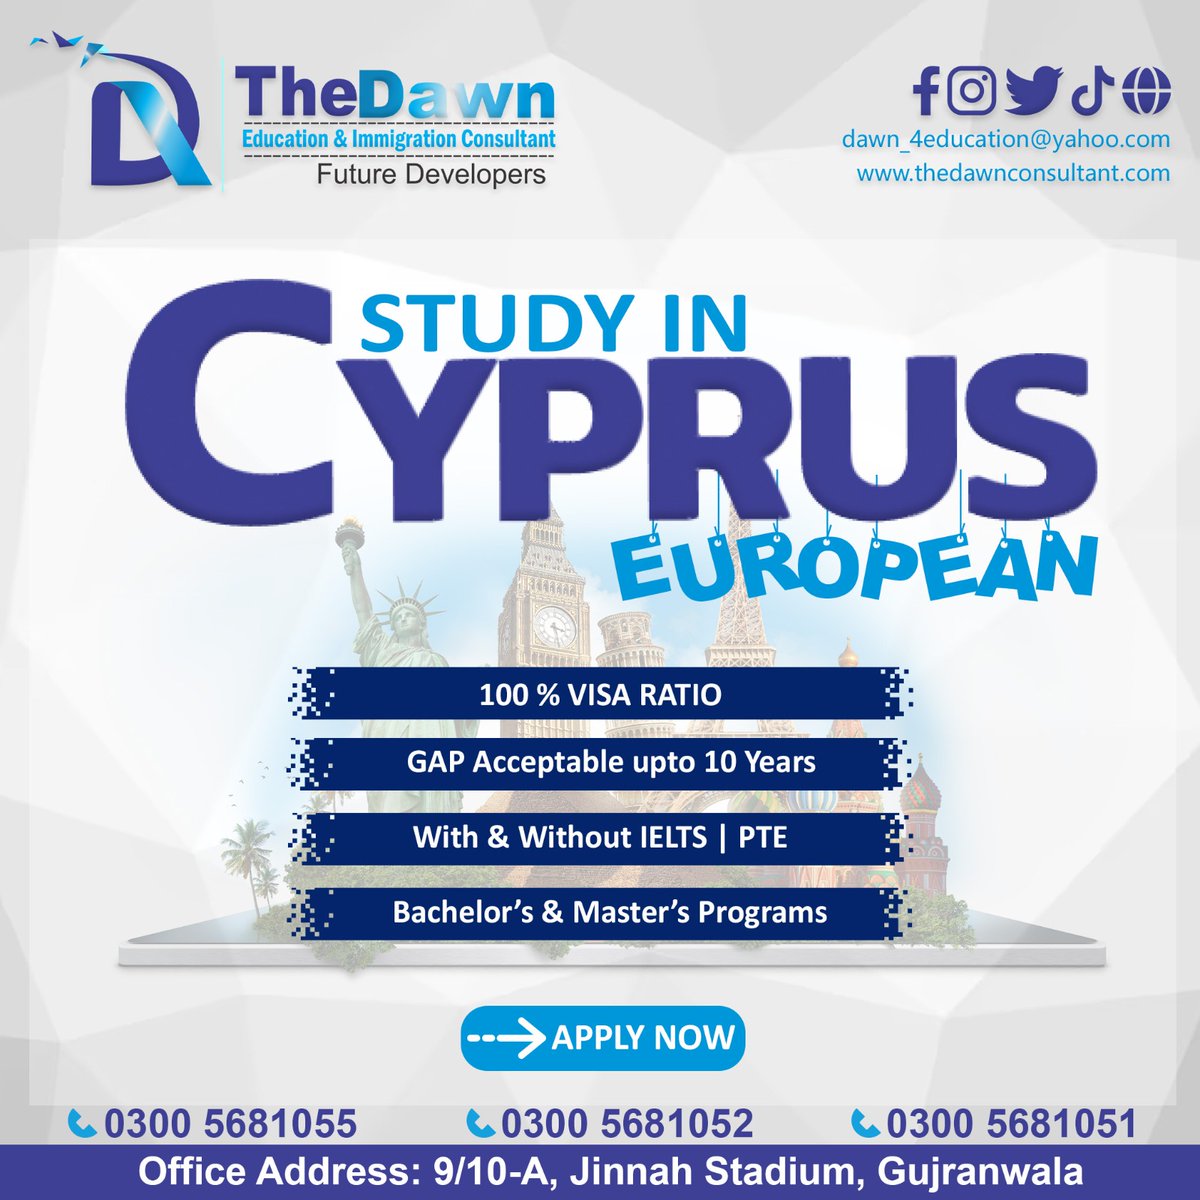 📷 Study in the European Cyprus...!

Contact Us at 03005681055, 03005681052, 03005681051

#dawnconsultants #studyineuropeancyprus #studyincyprus
#studyabroad #ieltspreparation #ptepreparation #LanguageAcademy #study #dawnconsultants